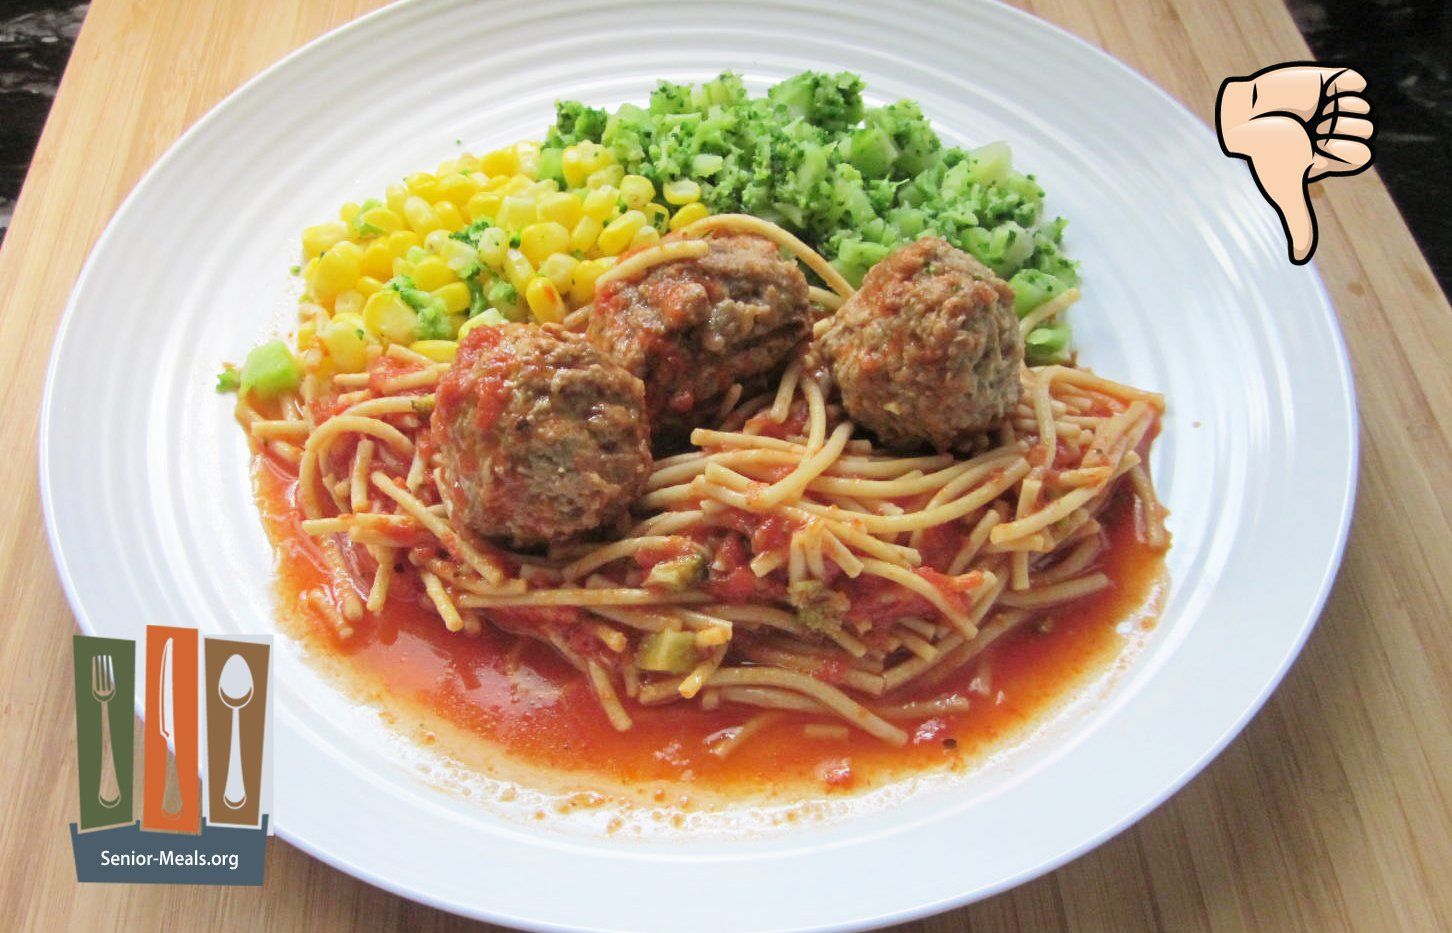 Spaghetti and Meatballs with Broccoli and Corn - $11.50